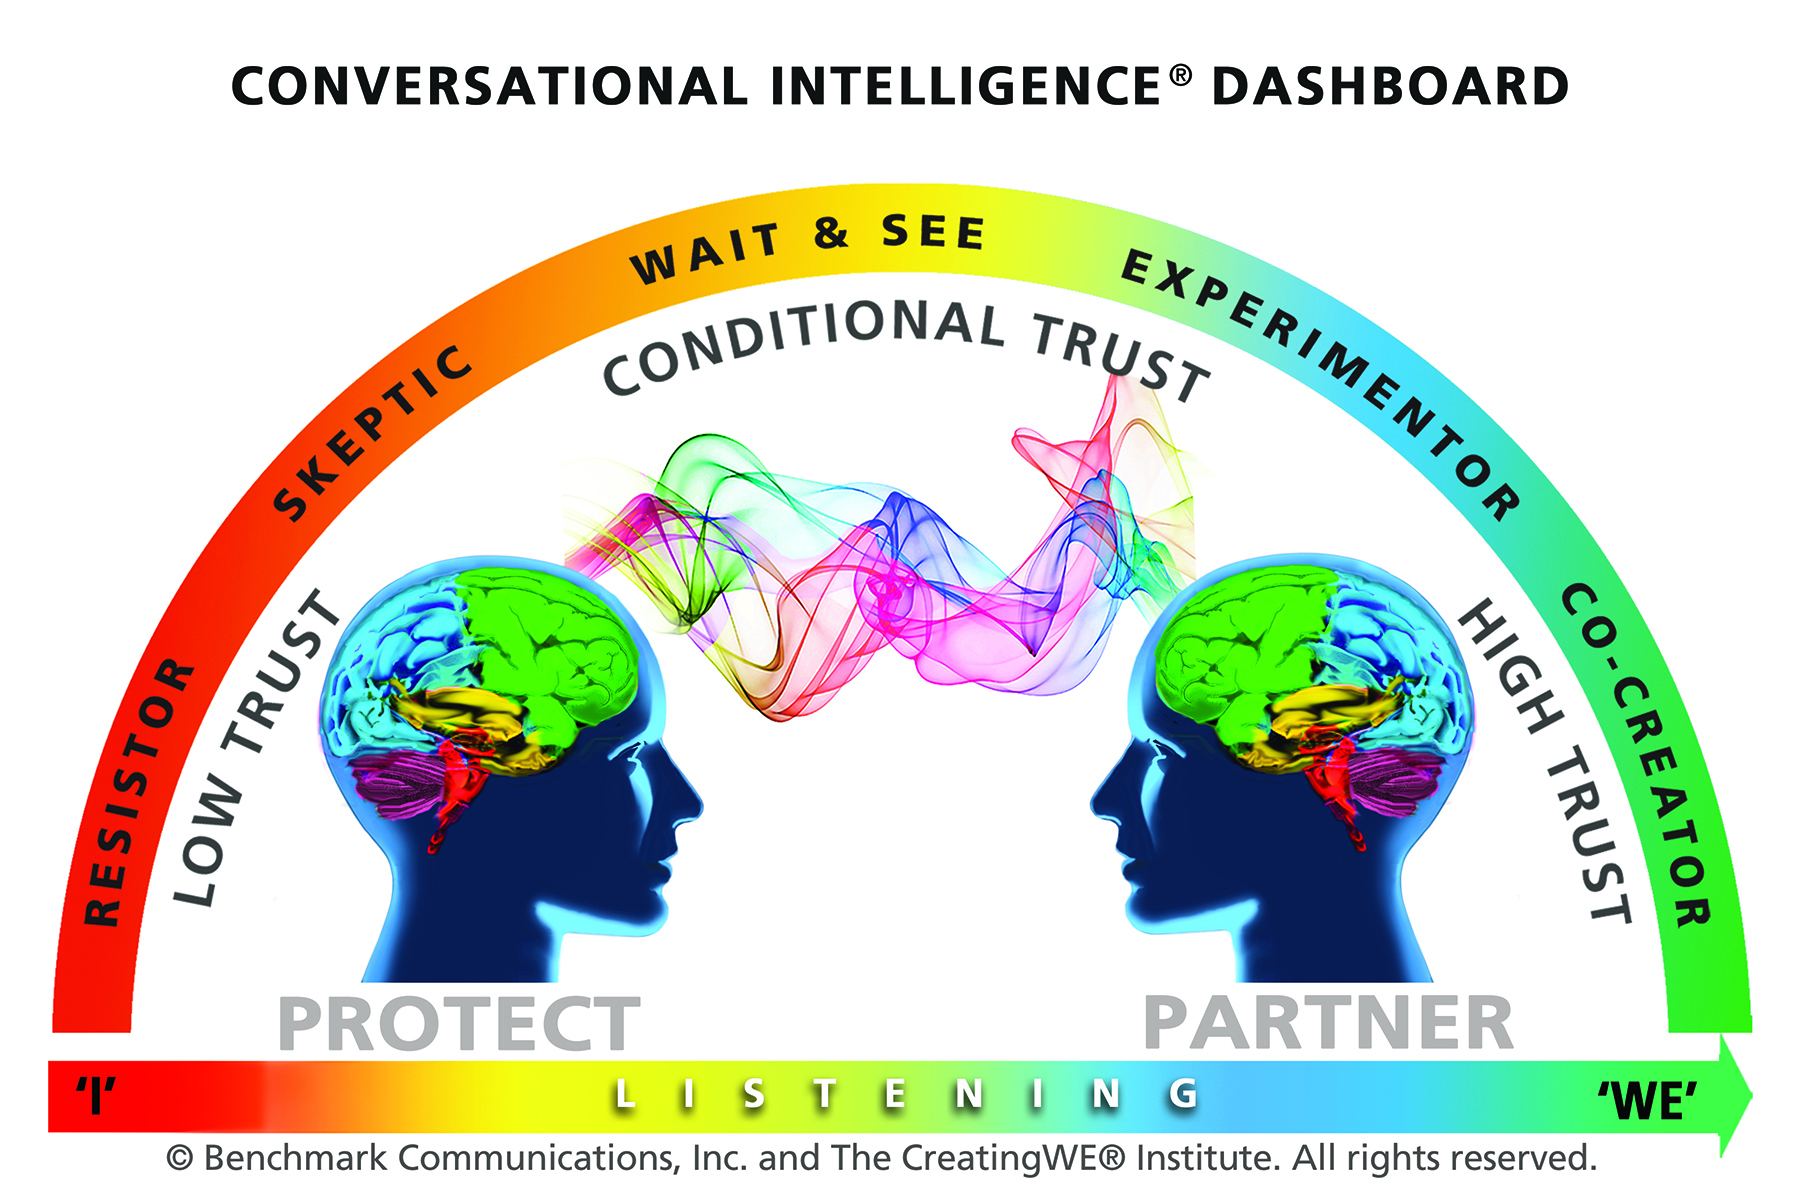 C-IQ Conversational Dashboard coloured image.